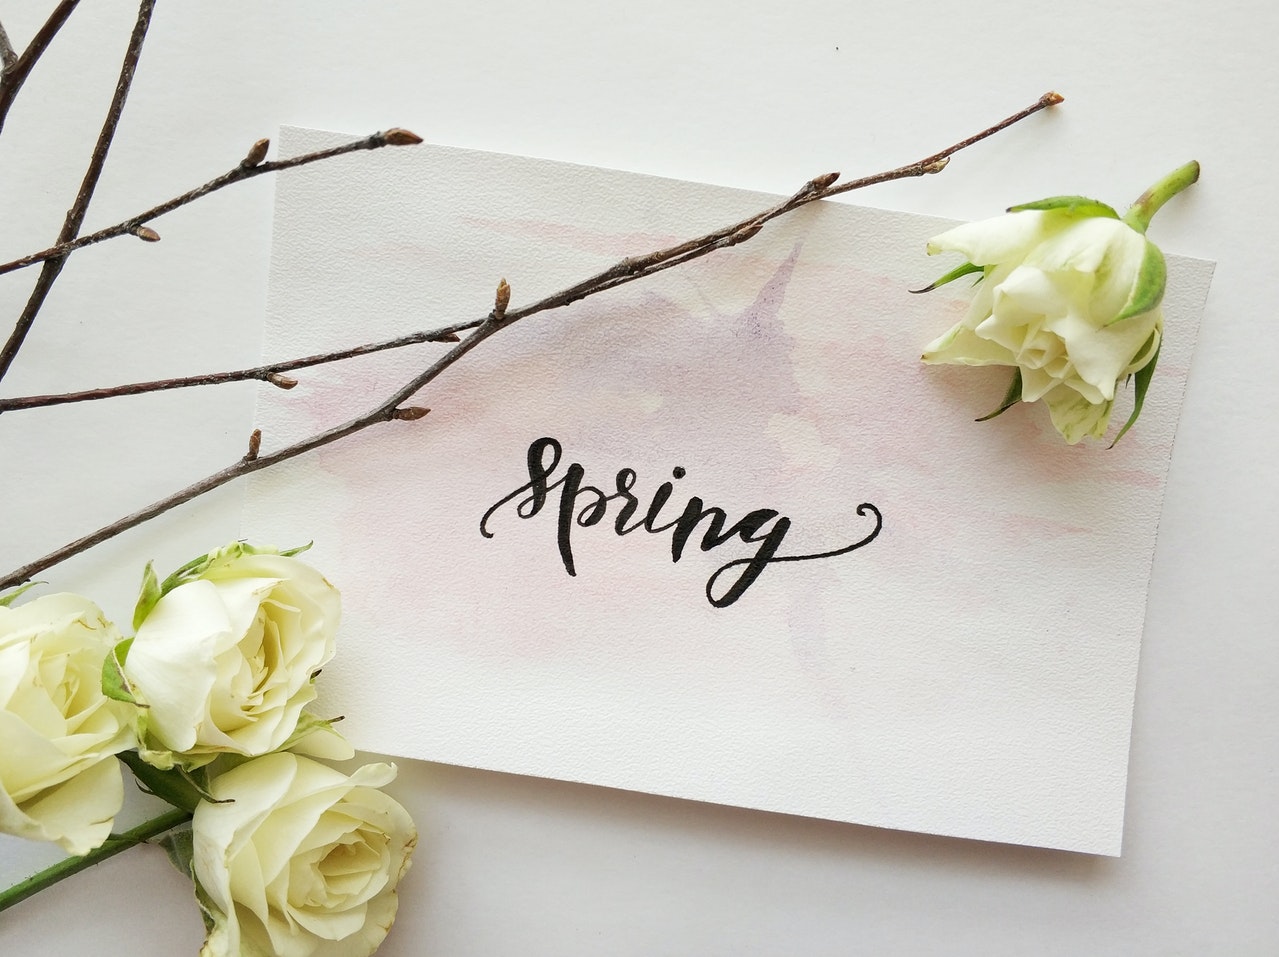 Frases idiomáticas – Spring!